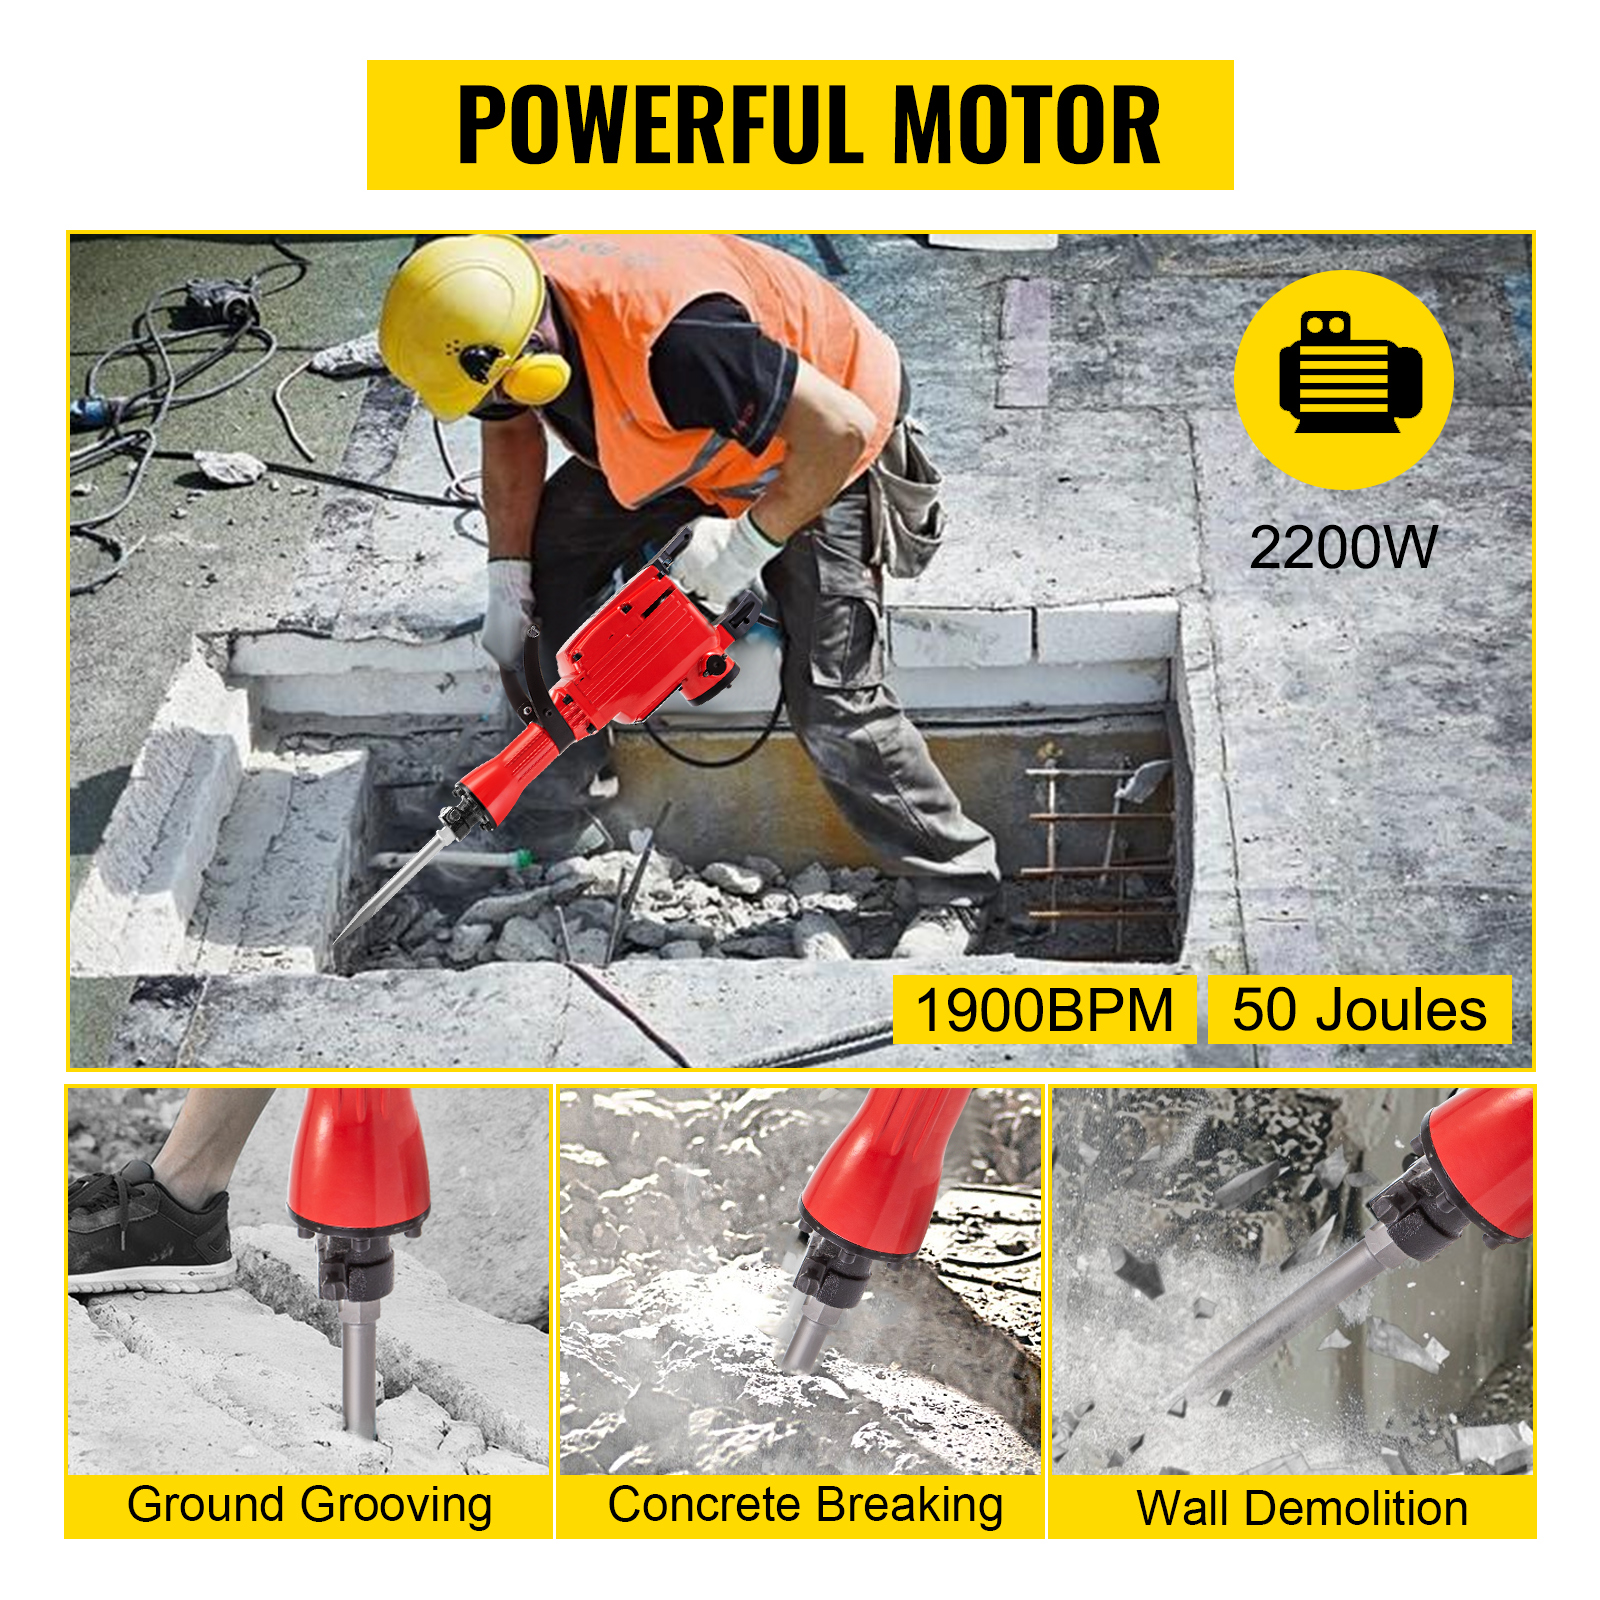 VEVOR Demolition Jack Hammer Jack Hammer Concrete Breaker 1200 Bpm Heavy Duty Electric Jack Hammer 3 Chisel Bit W/Gloves & 360° Swiveling Front